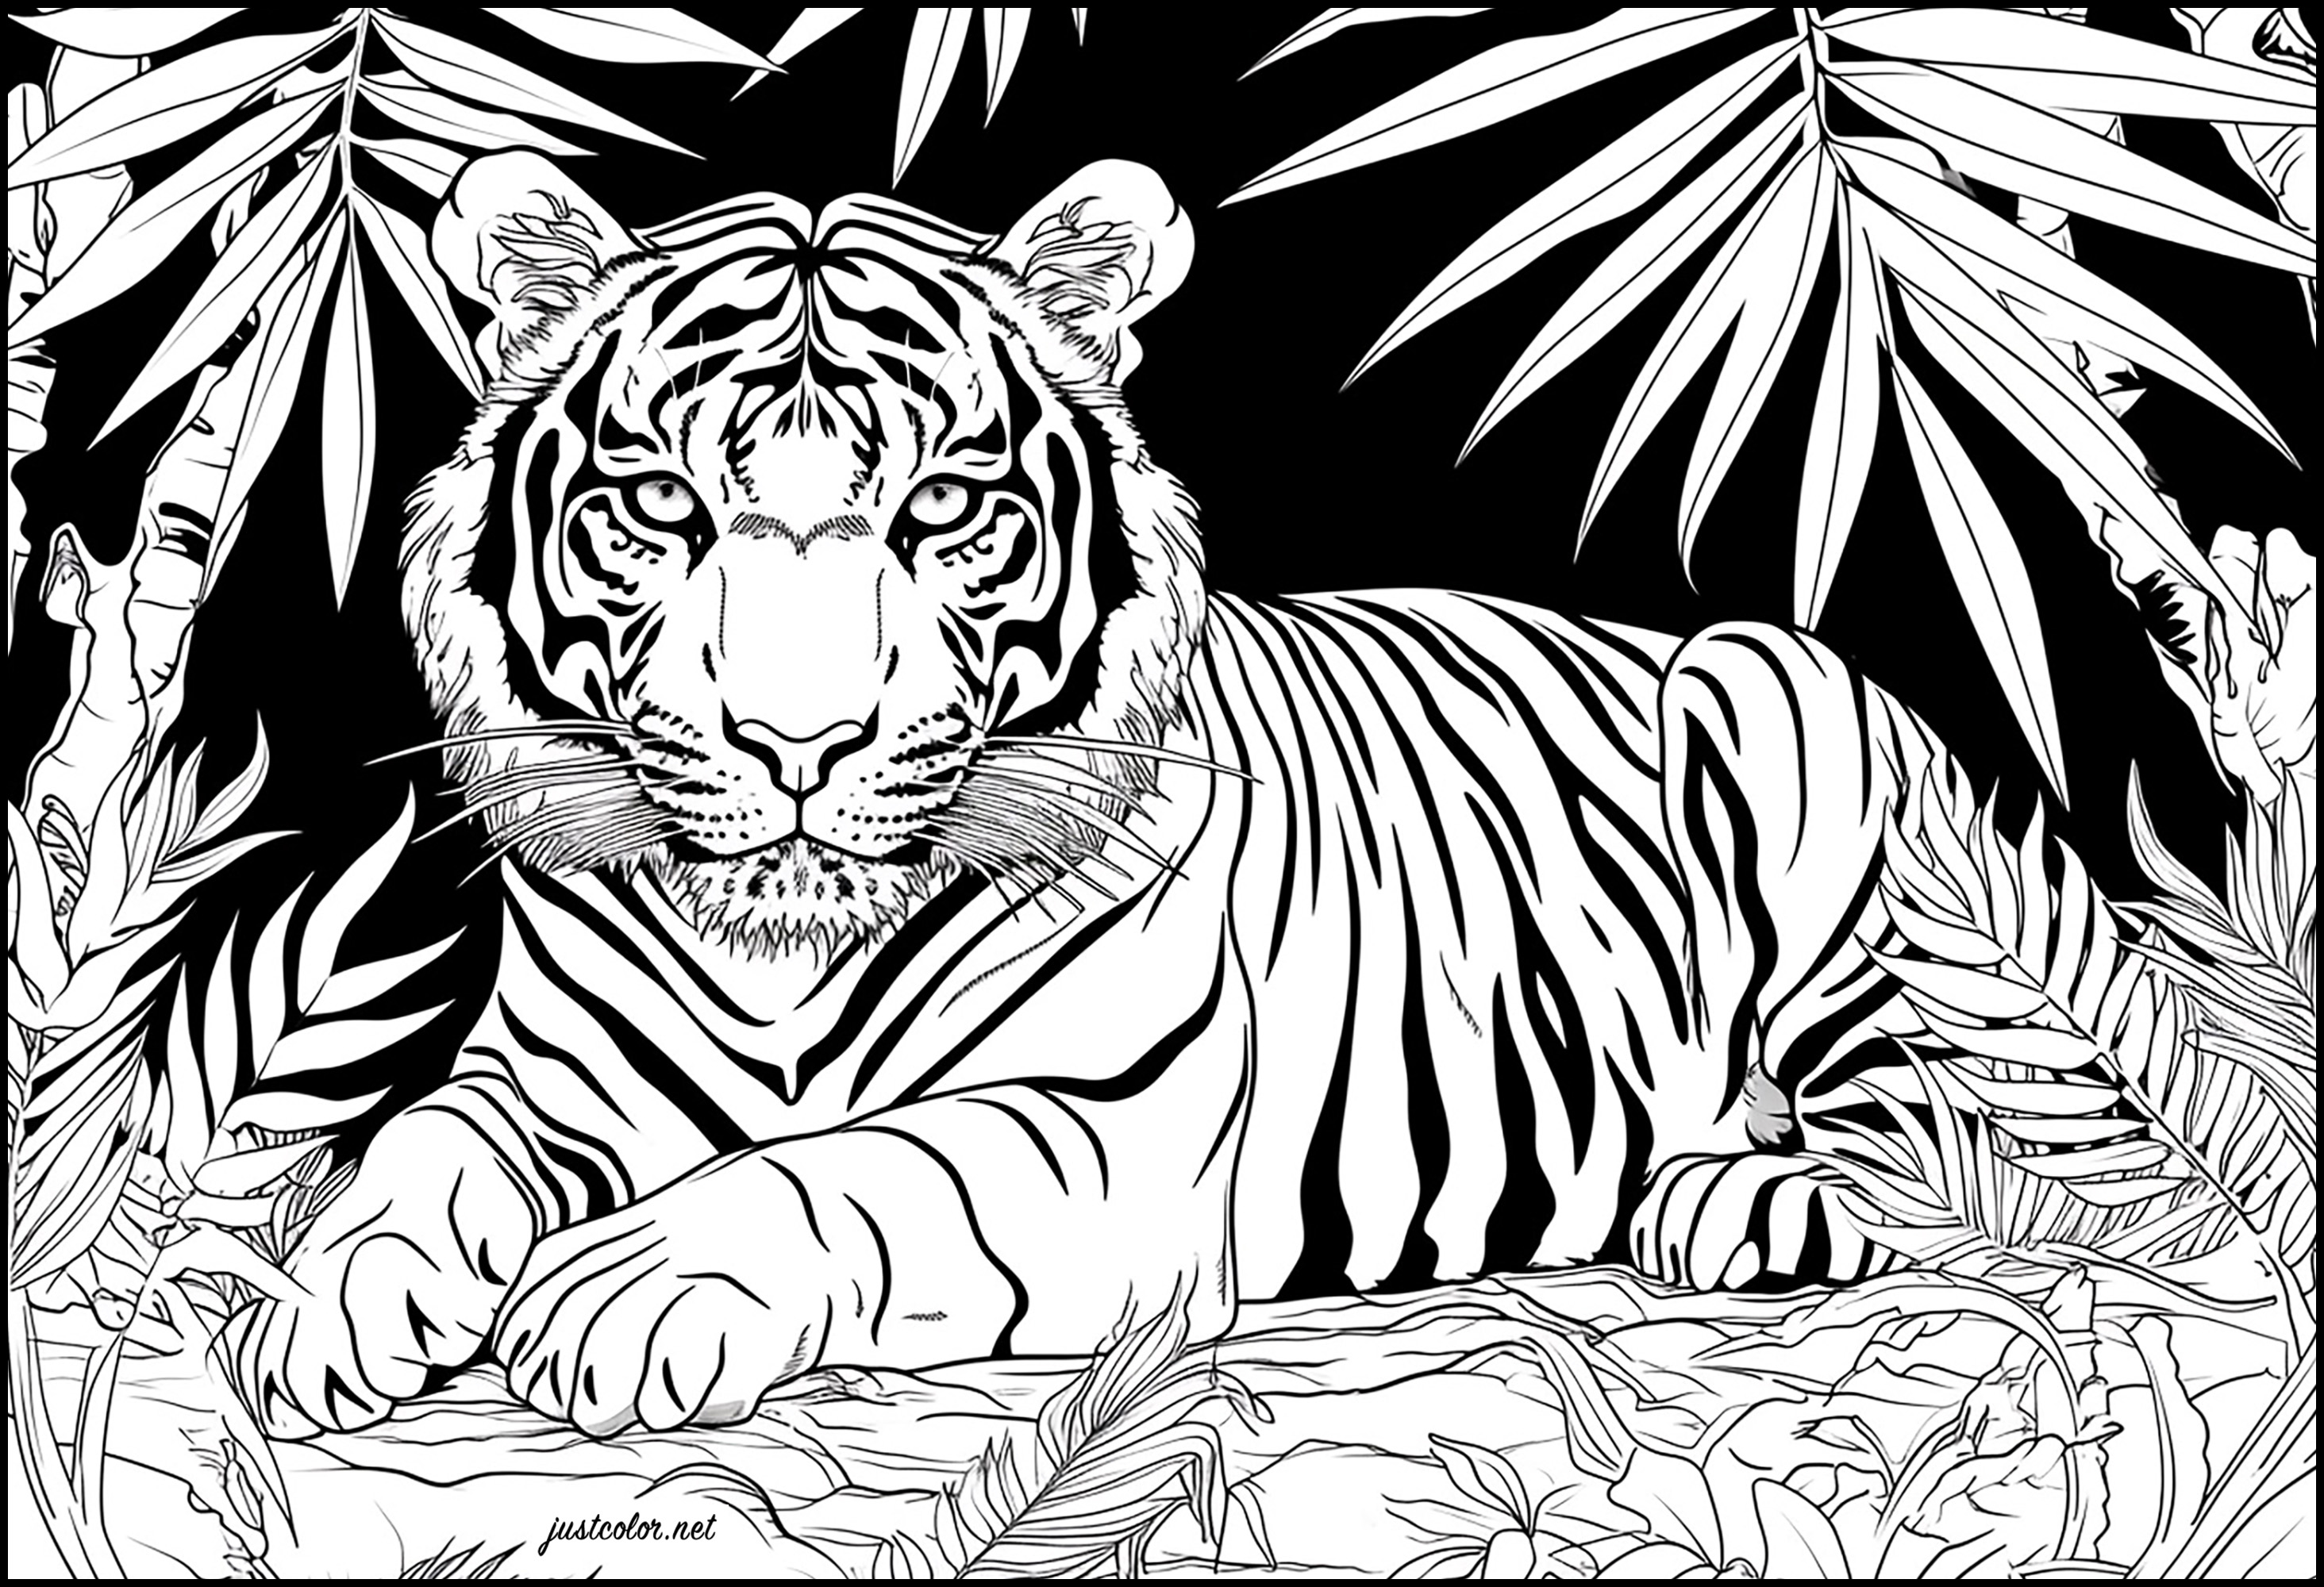 Majestic tiger on black background